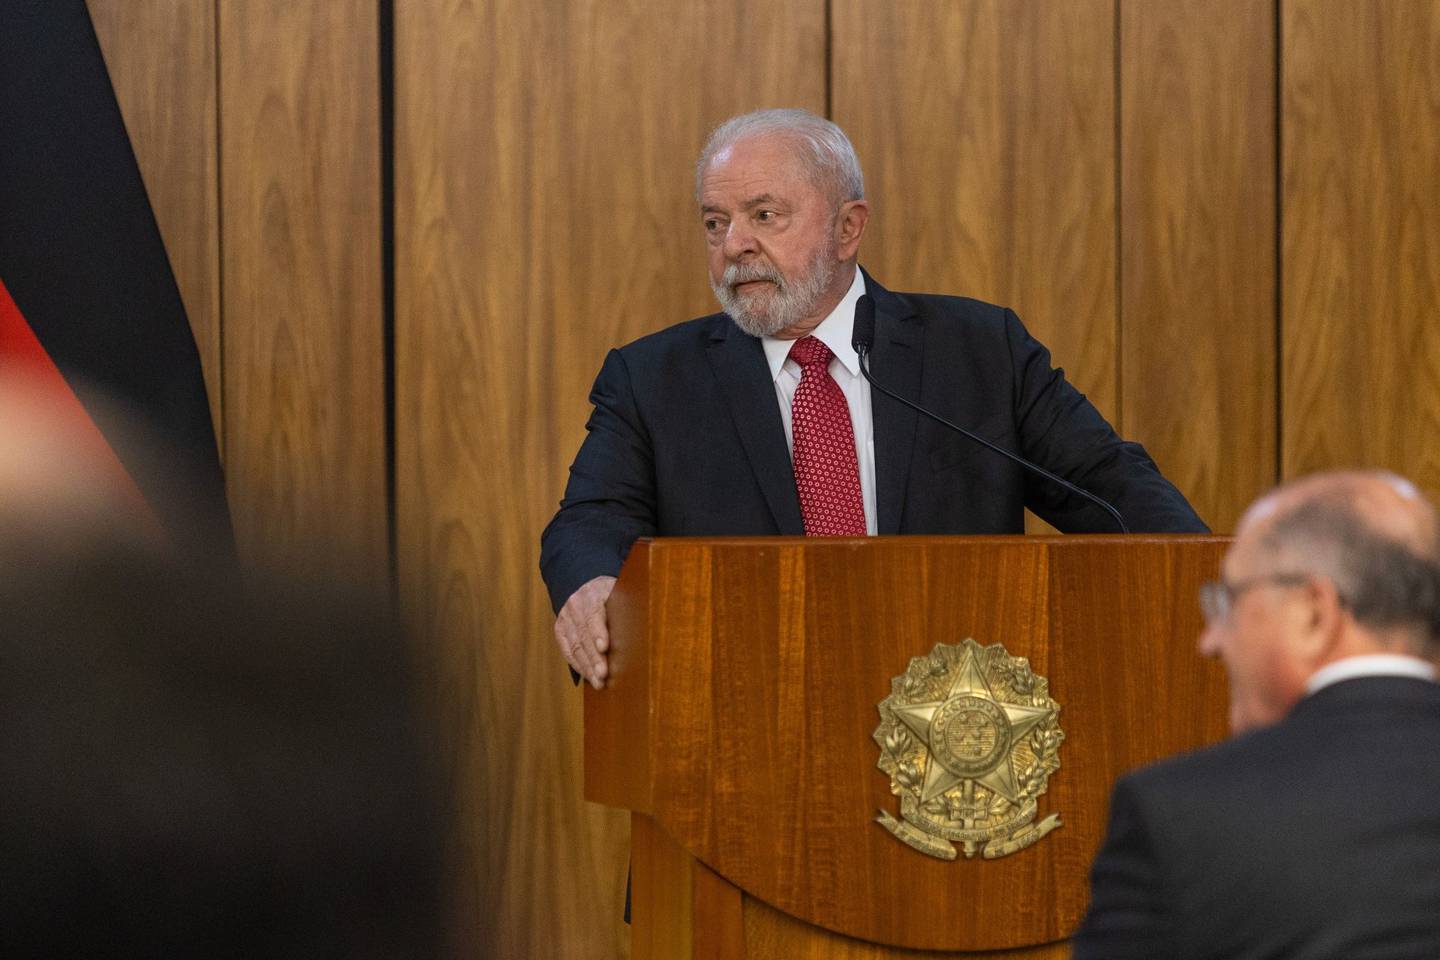 Luiz Inacio Lula da Silva, presidente de Brasil